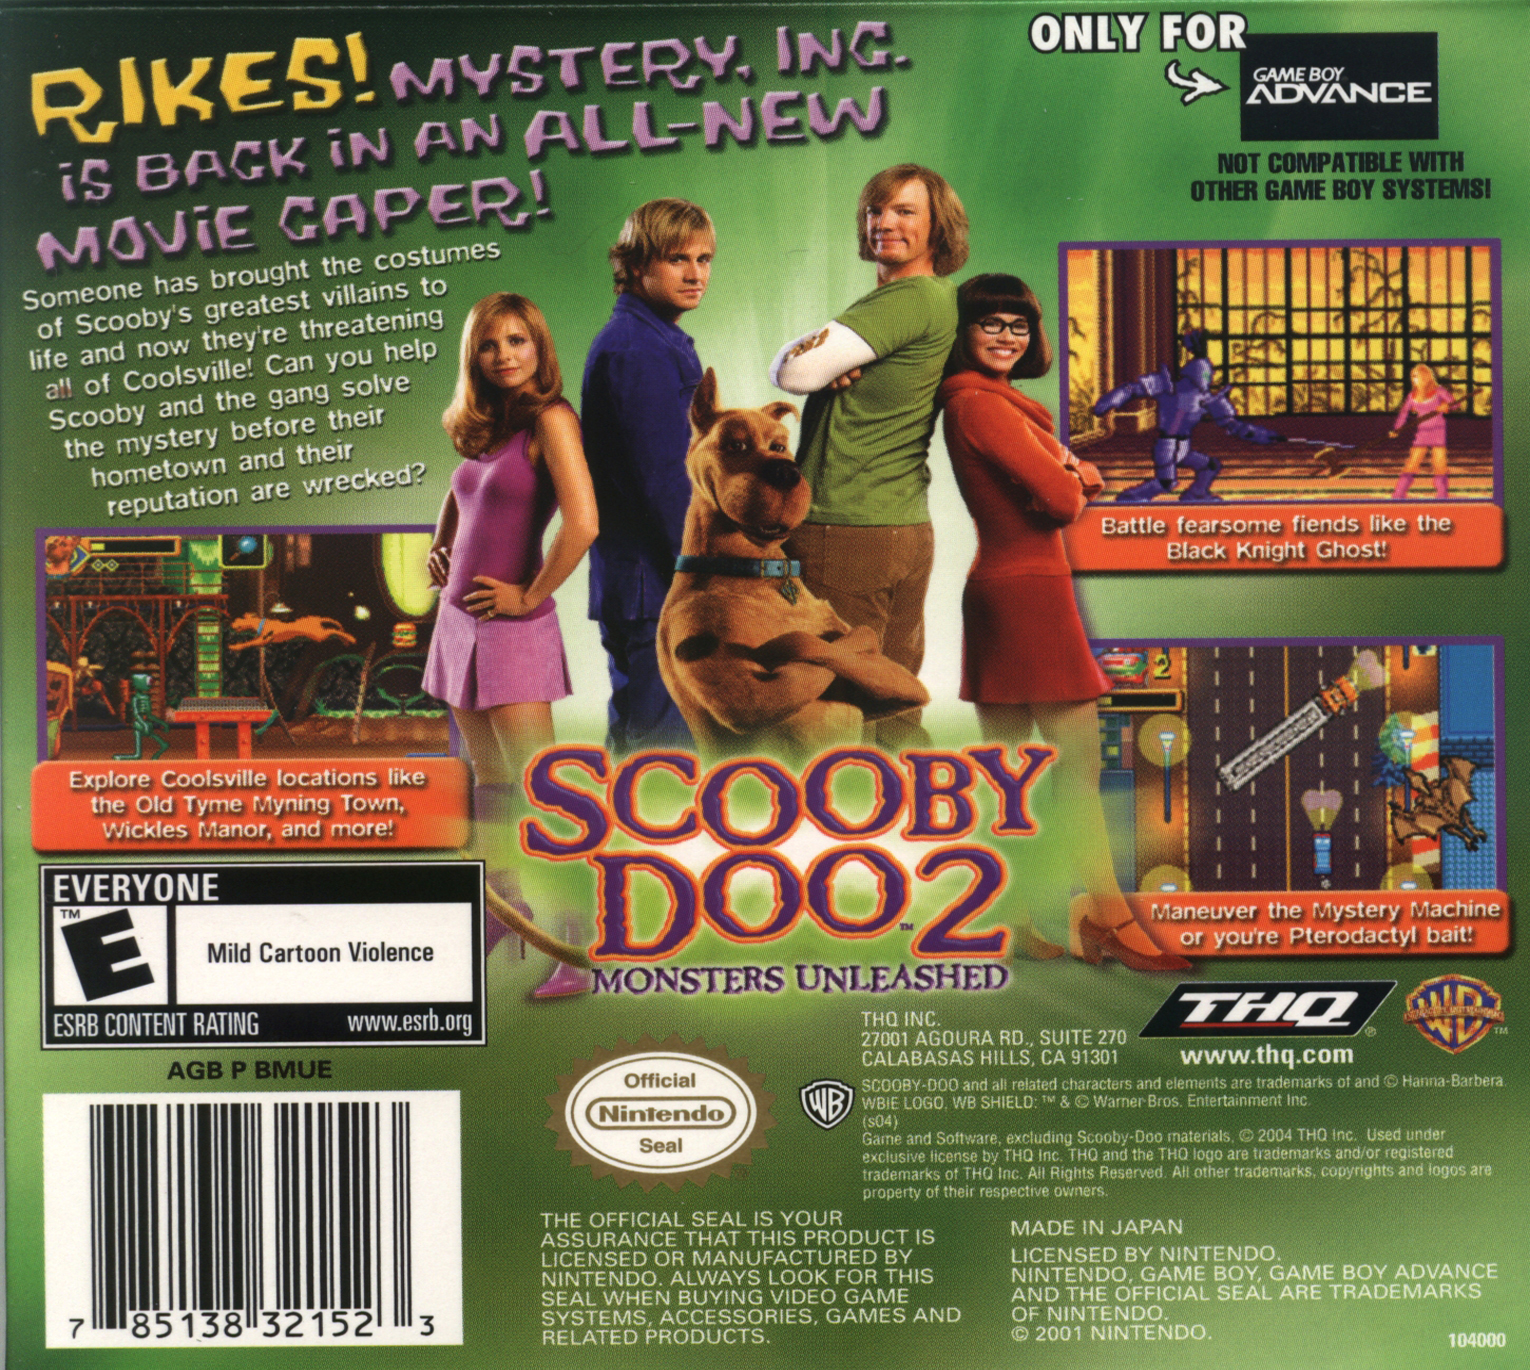 Scooby doo games. Game boy Advance Scooby Doo русская версия. Scooby-Doo 2 - Monsters unleashed GBA. Игры game boy Advance Скуби Ду. Скуби Ду 2 монстры игра.